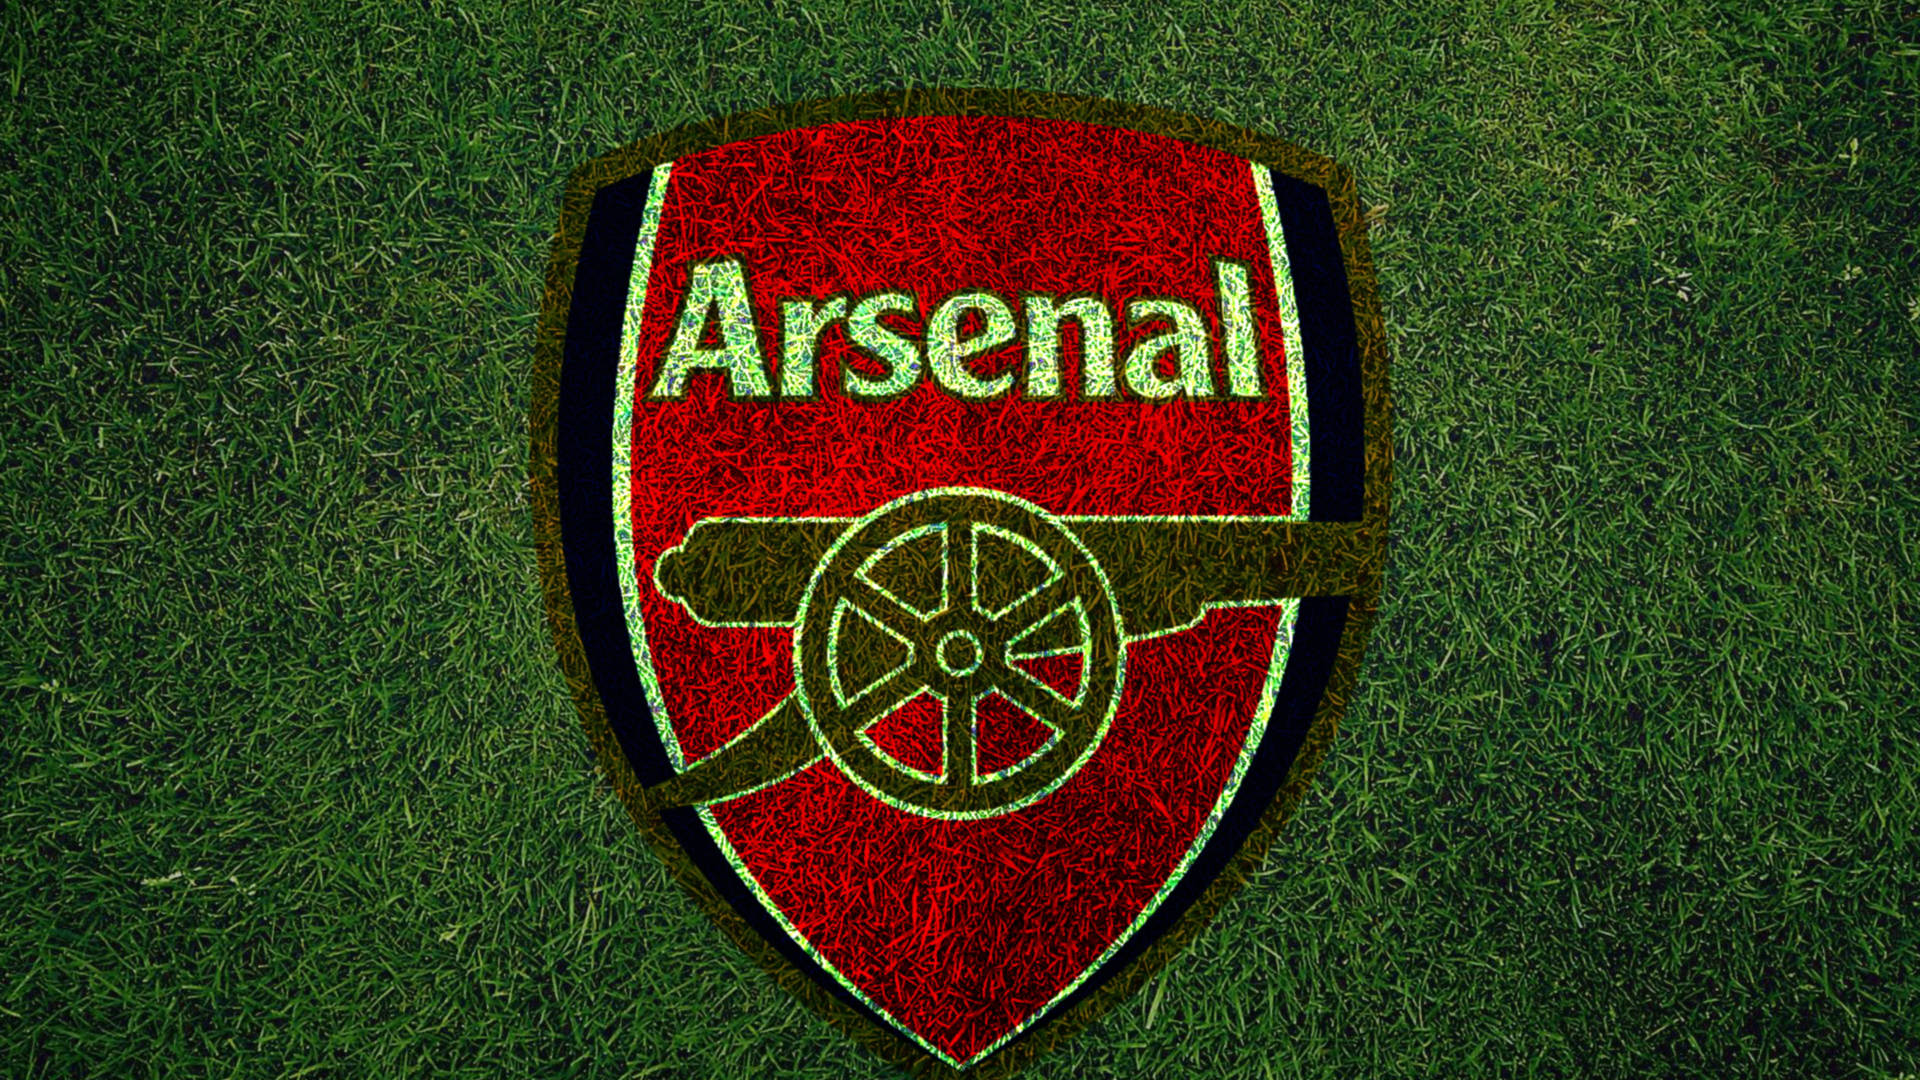 Arsenal Logo On Grass Field